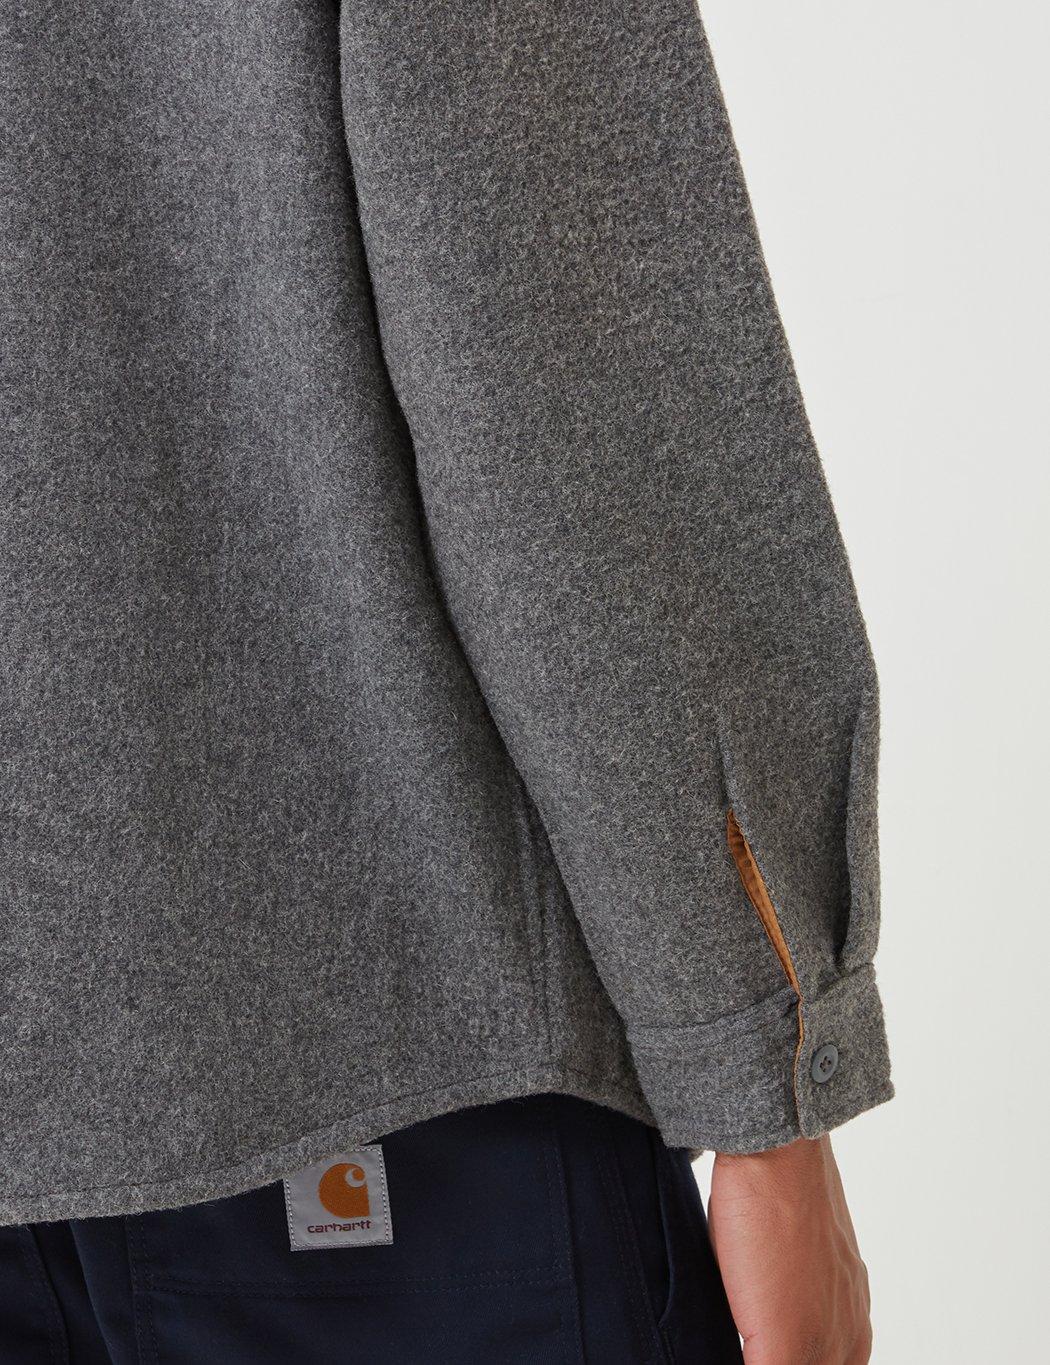 Carhartt Wool Wip Milner Shirt Jacket in Grey (Gray) for Men - Lyst